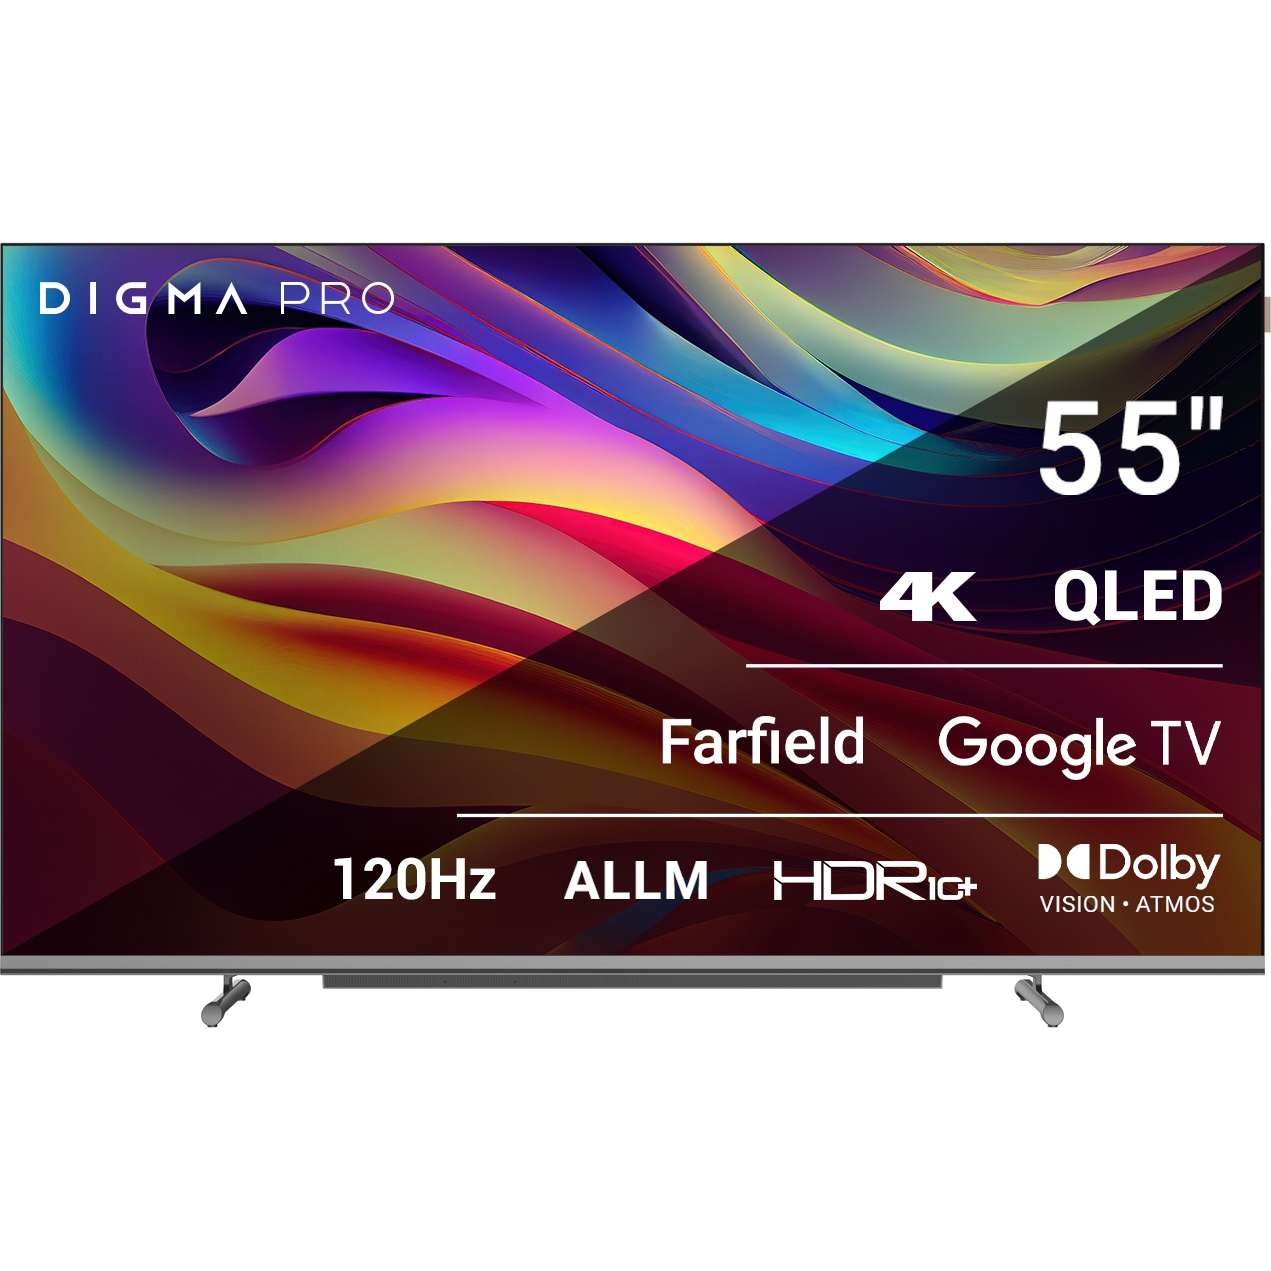 Телевизор Digma Pro 55 55L телевизор digma pro 55 55l